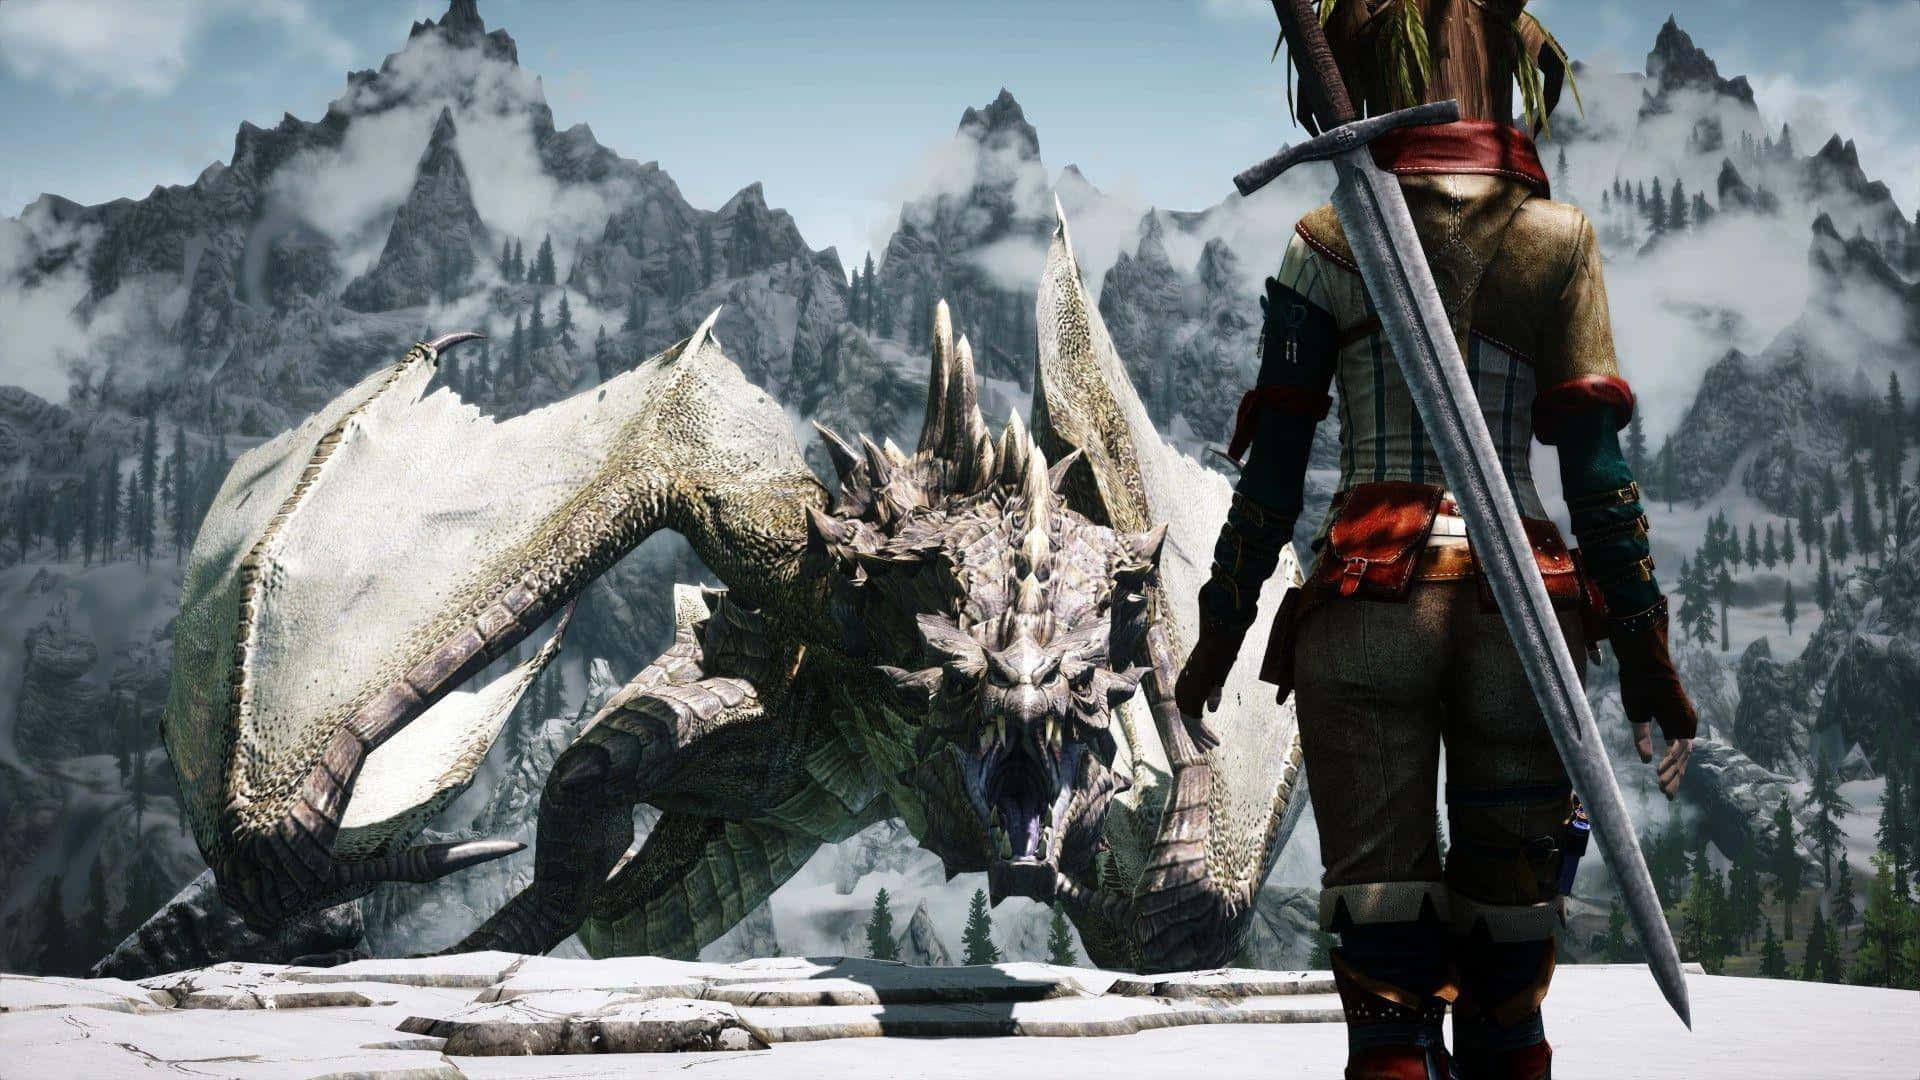 Ilmozzafiato Mondo Fantasy Di The Elder Scrolls V: Skyrim